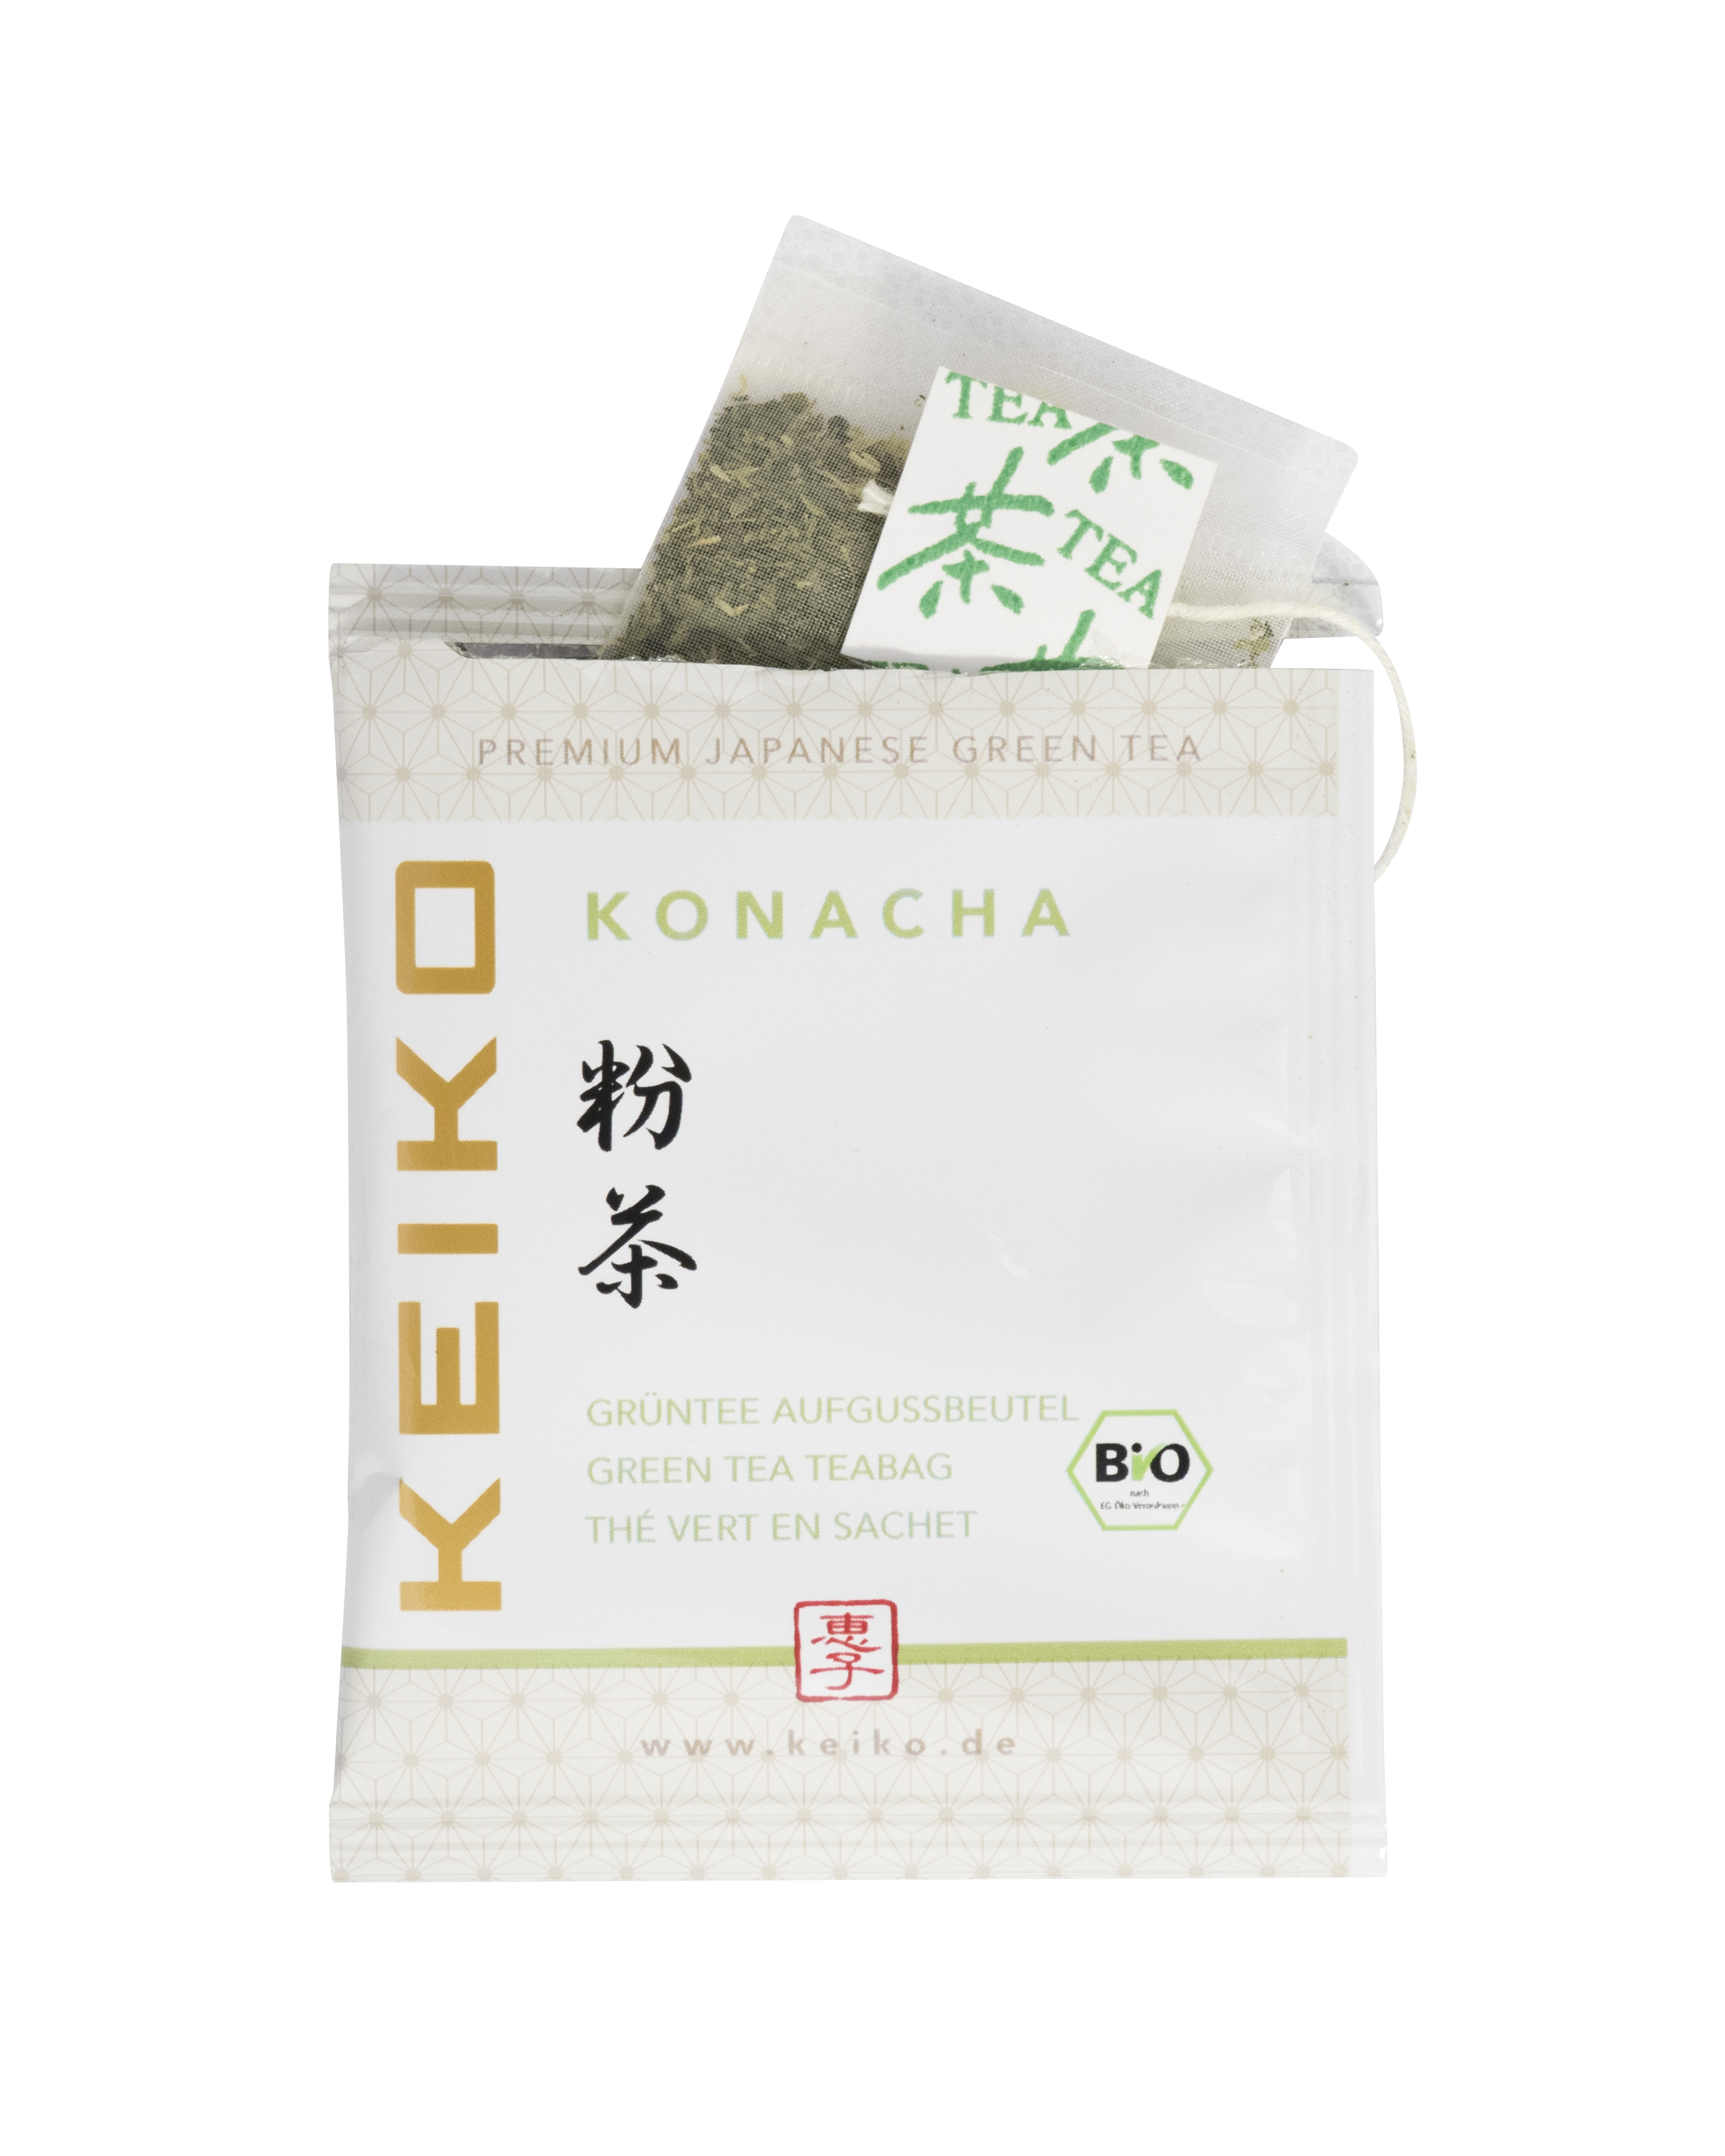 Konacha teabags - Organic Japanese Green Tea